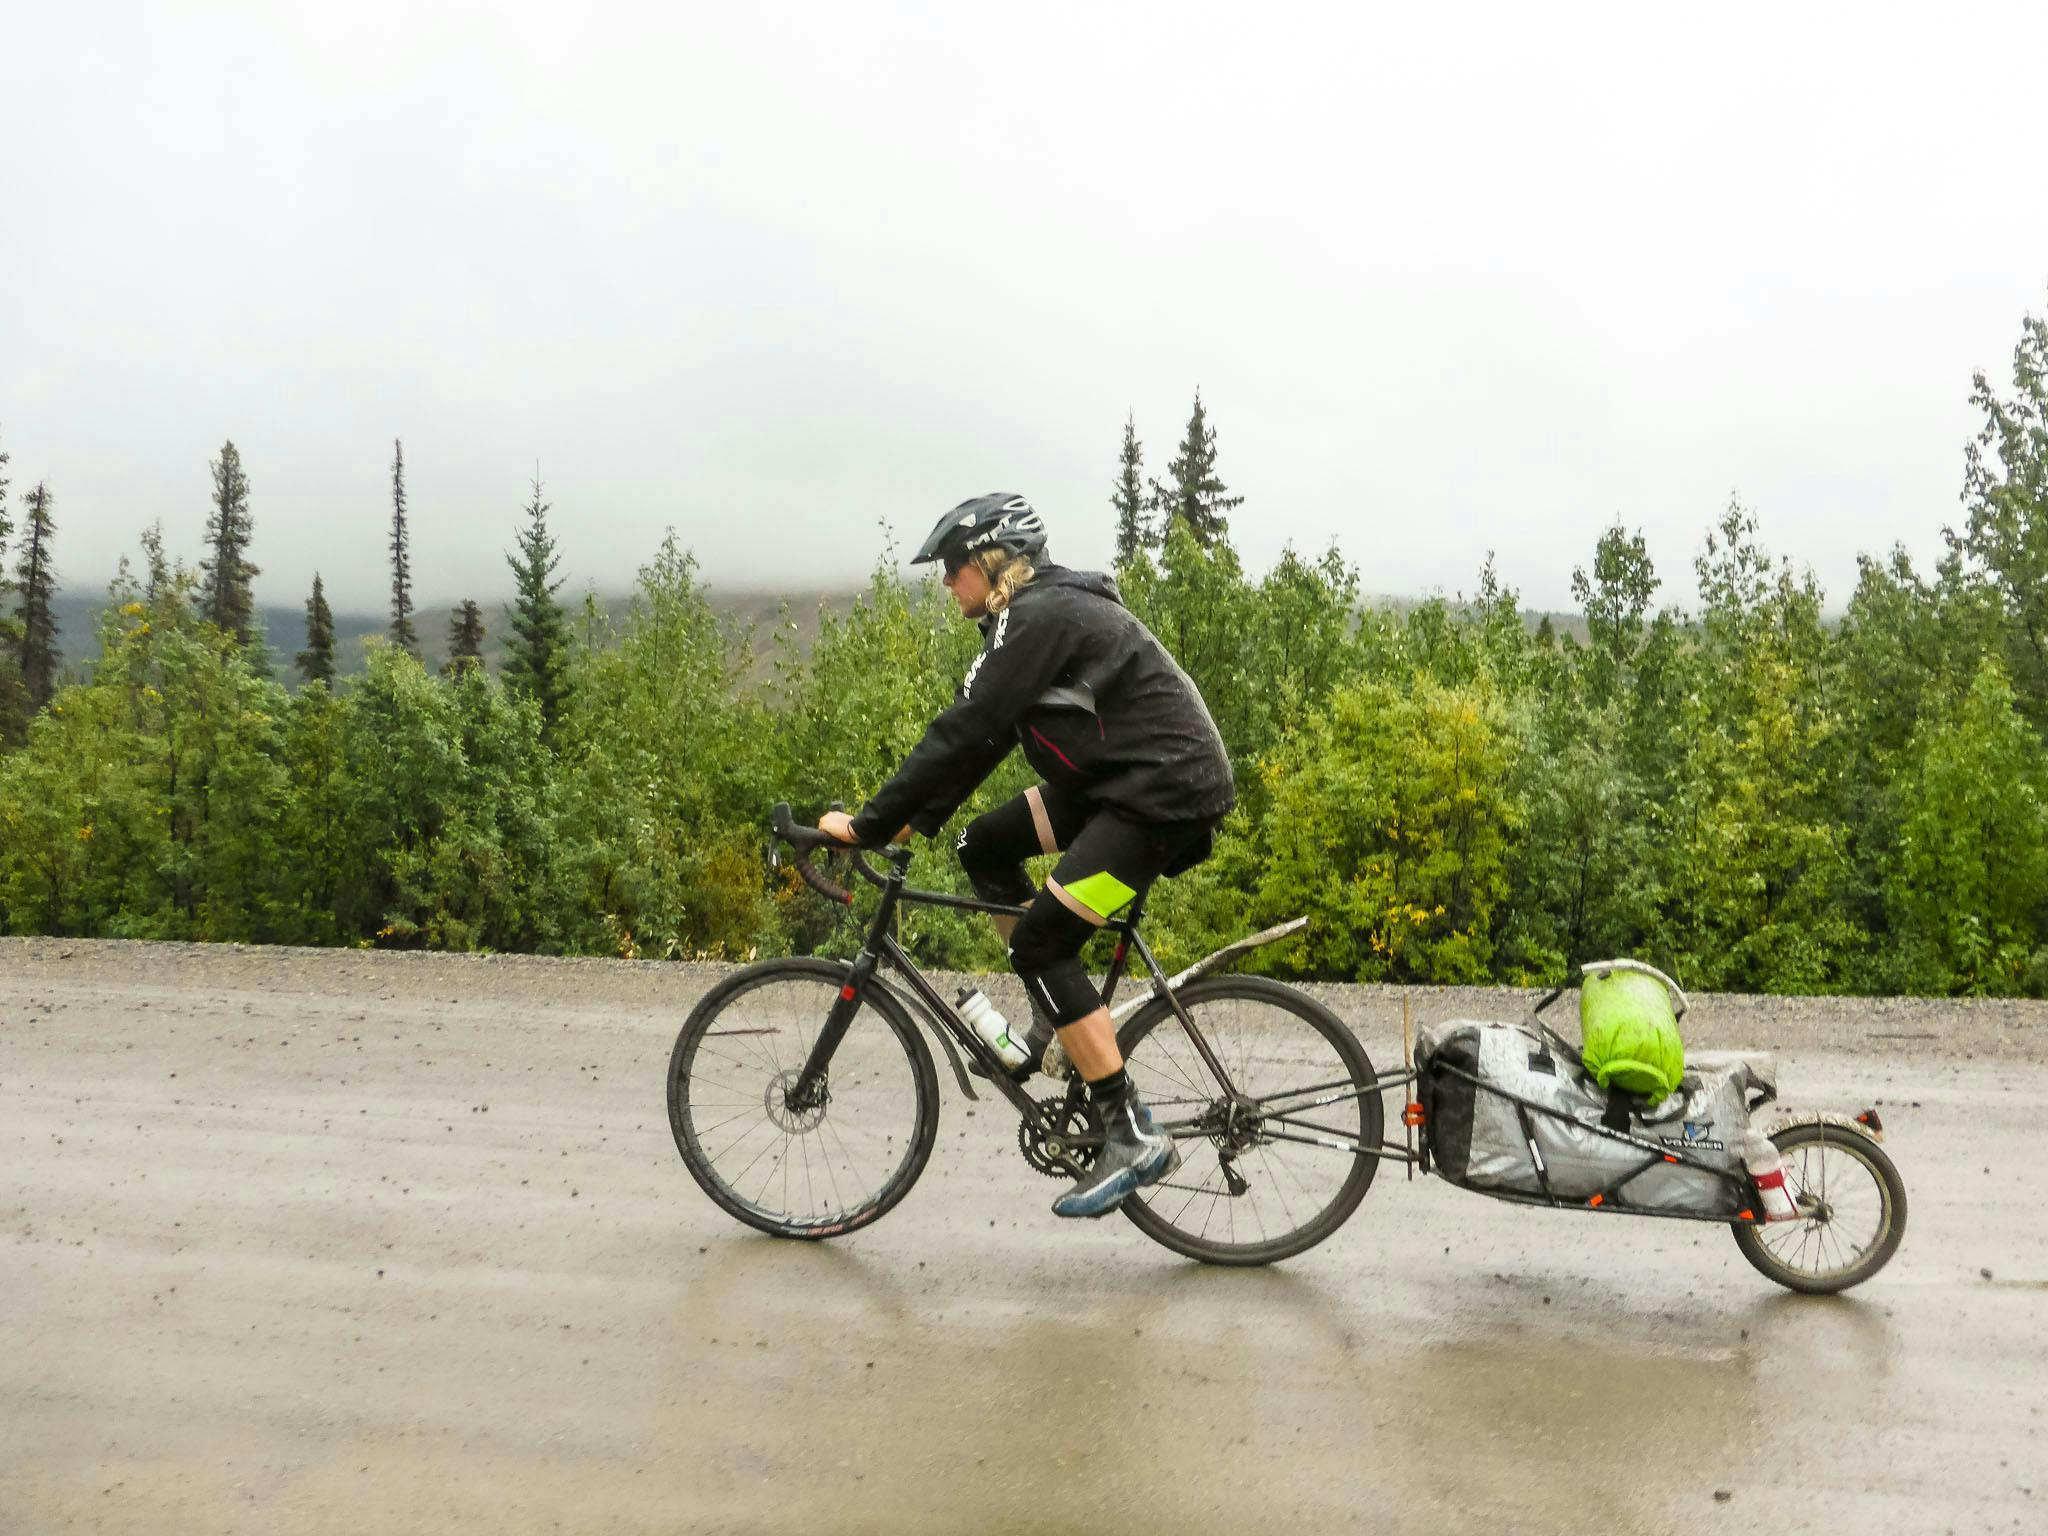 Reuben Krabbe bike touring on the Dempster Highway